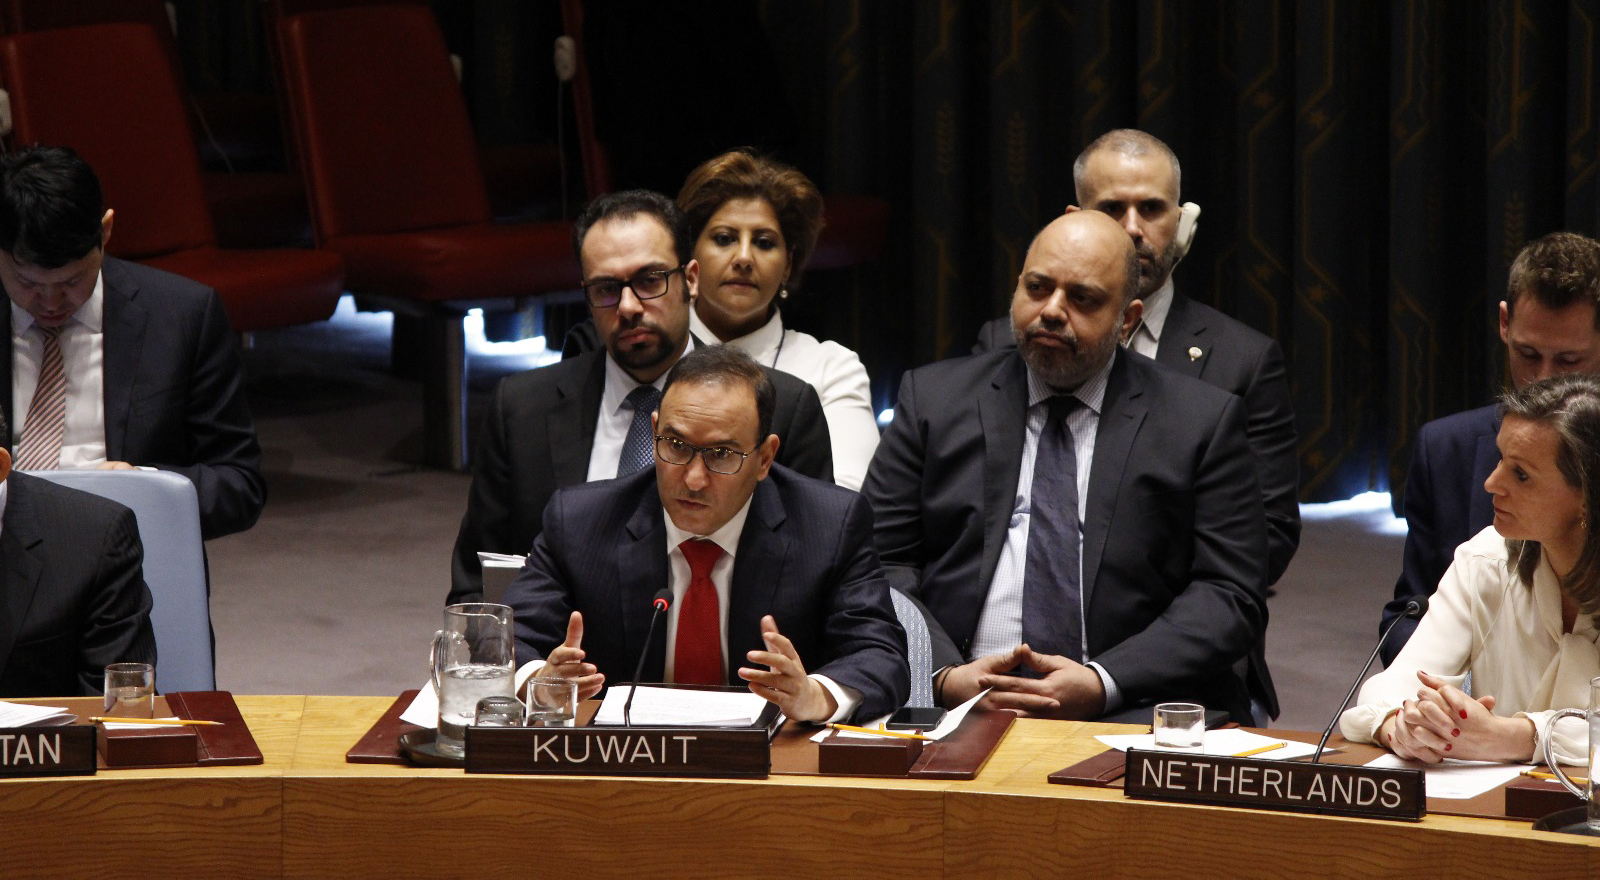 Kuwait's Permanent Delegate to the UN Ambassador Mansour Al-Otaibi speaks during the special UN Security Council session on Yemen